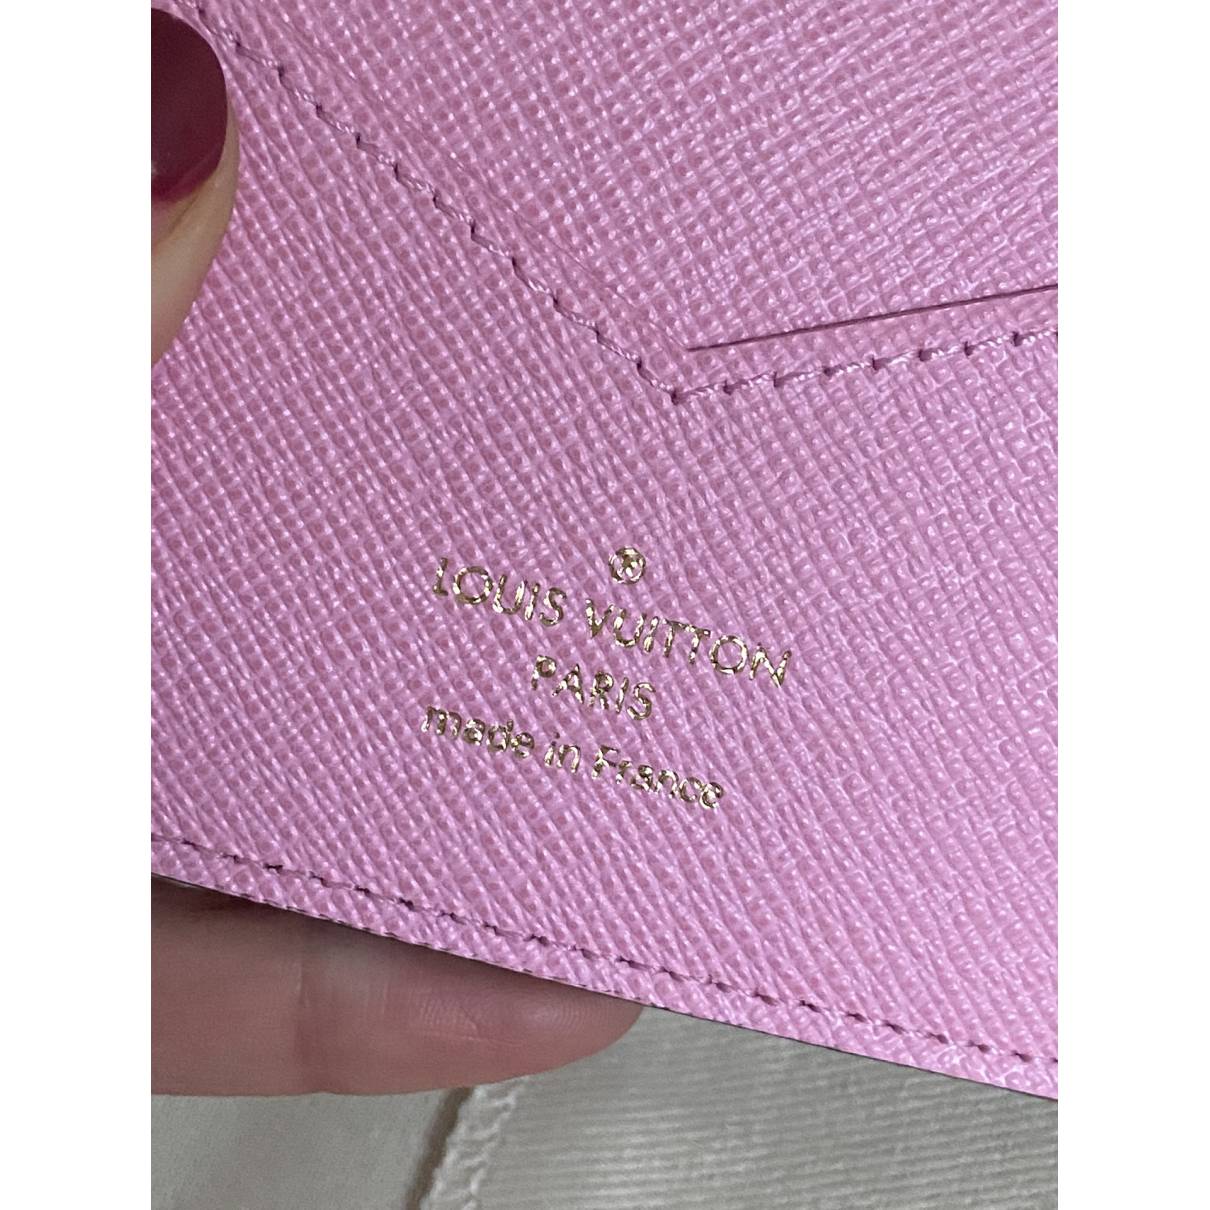 louis vuitton passport holder pink